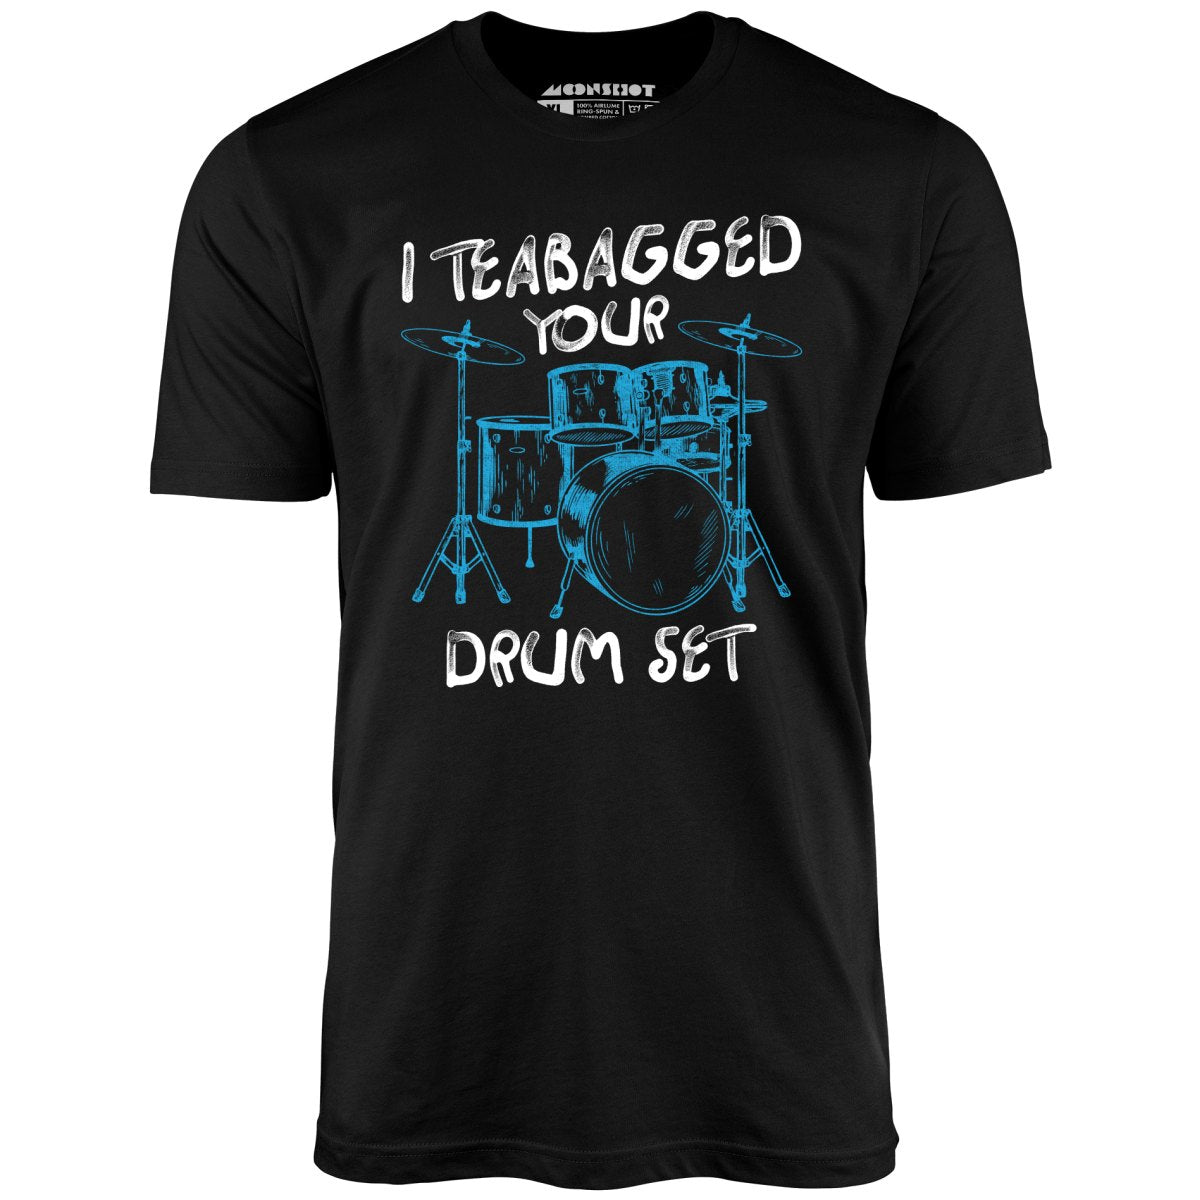 I Teabagged Your Drum Set - Unisex T-Shirt